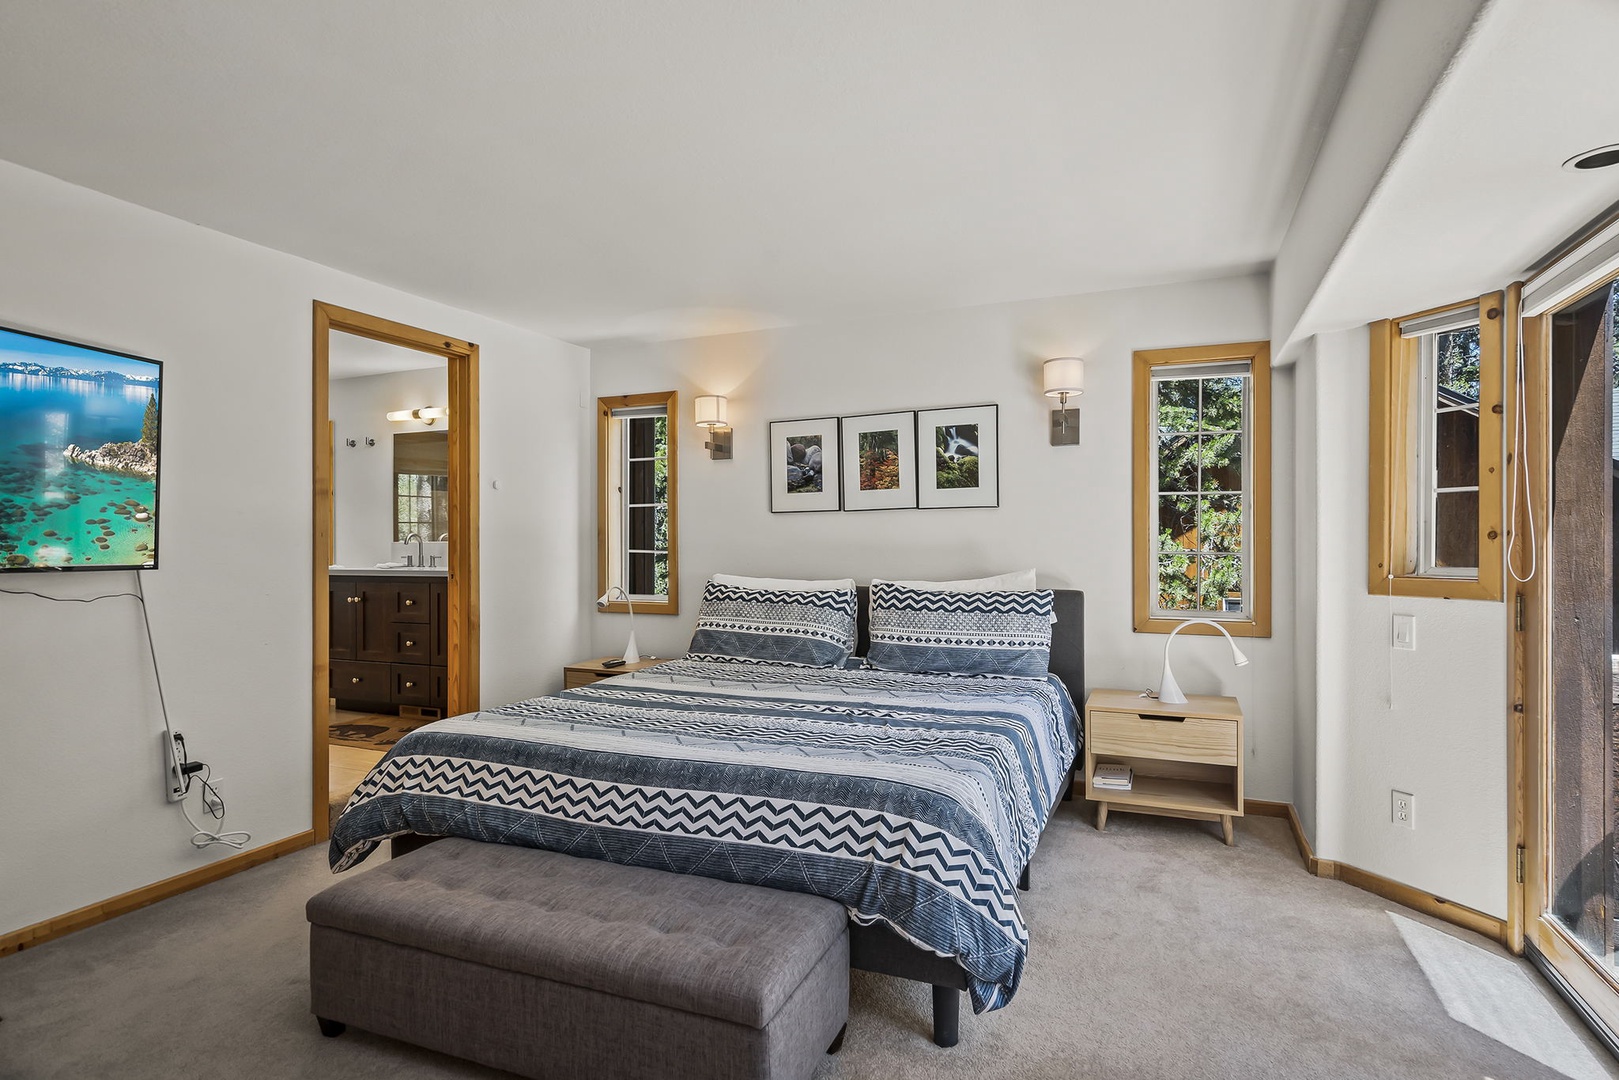 Master bedroom: 
Donner Lake Vacation Lodge